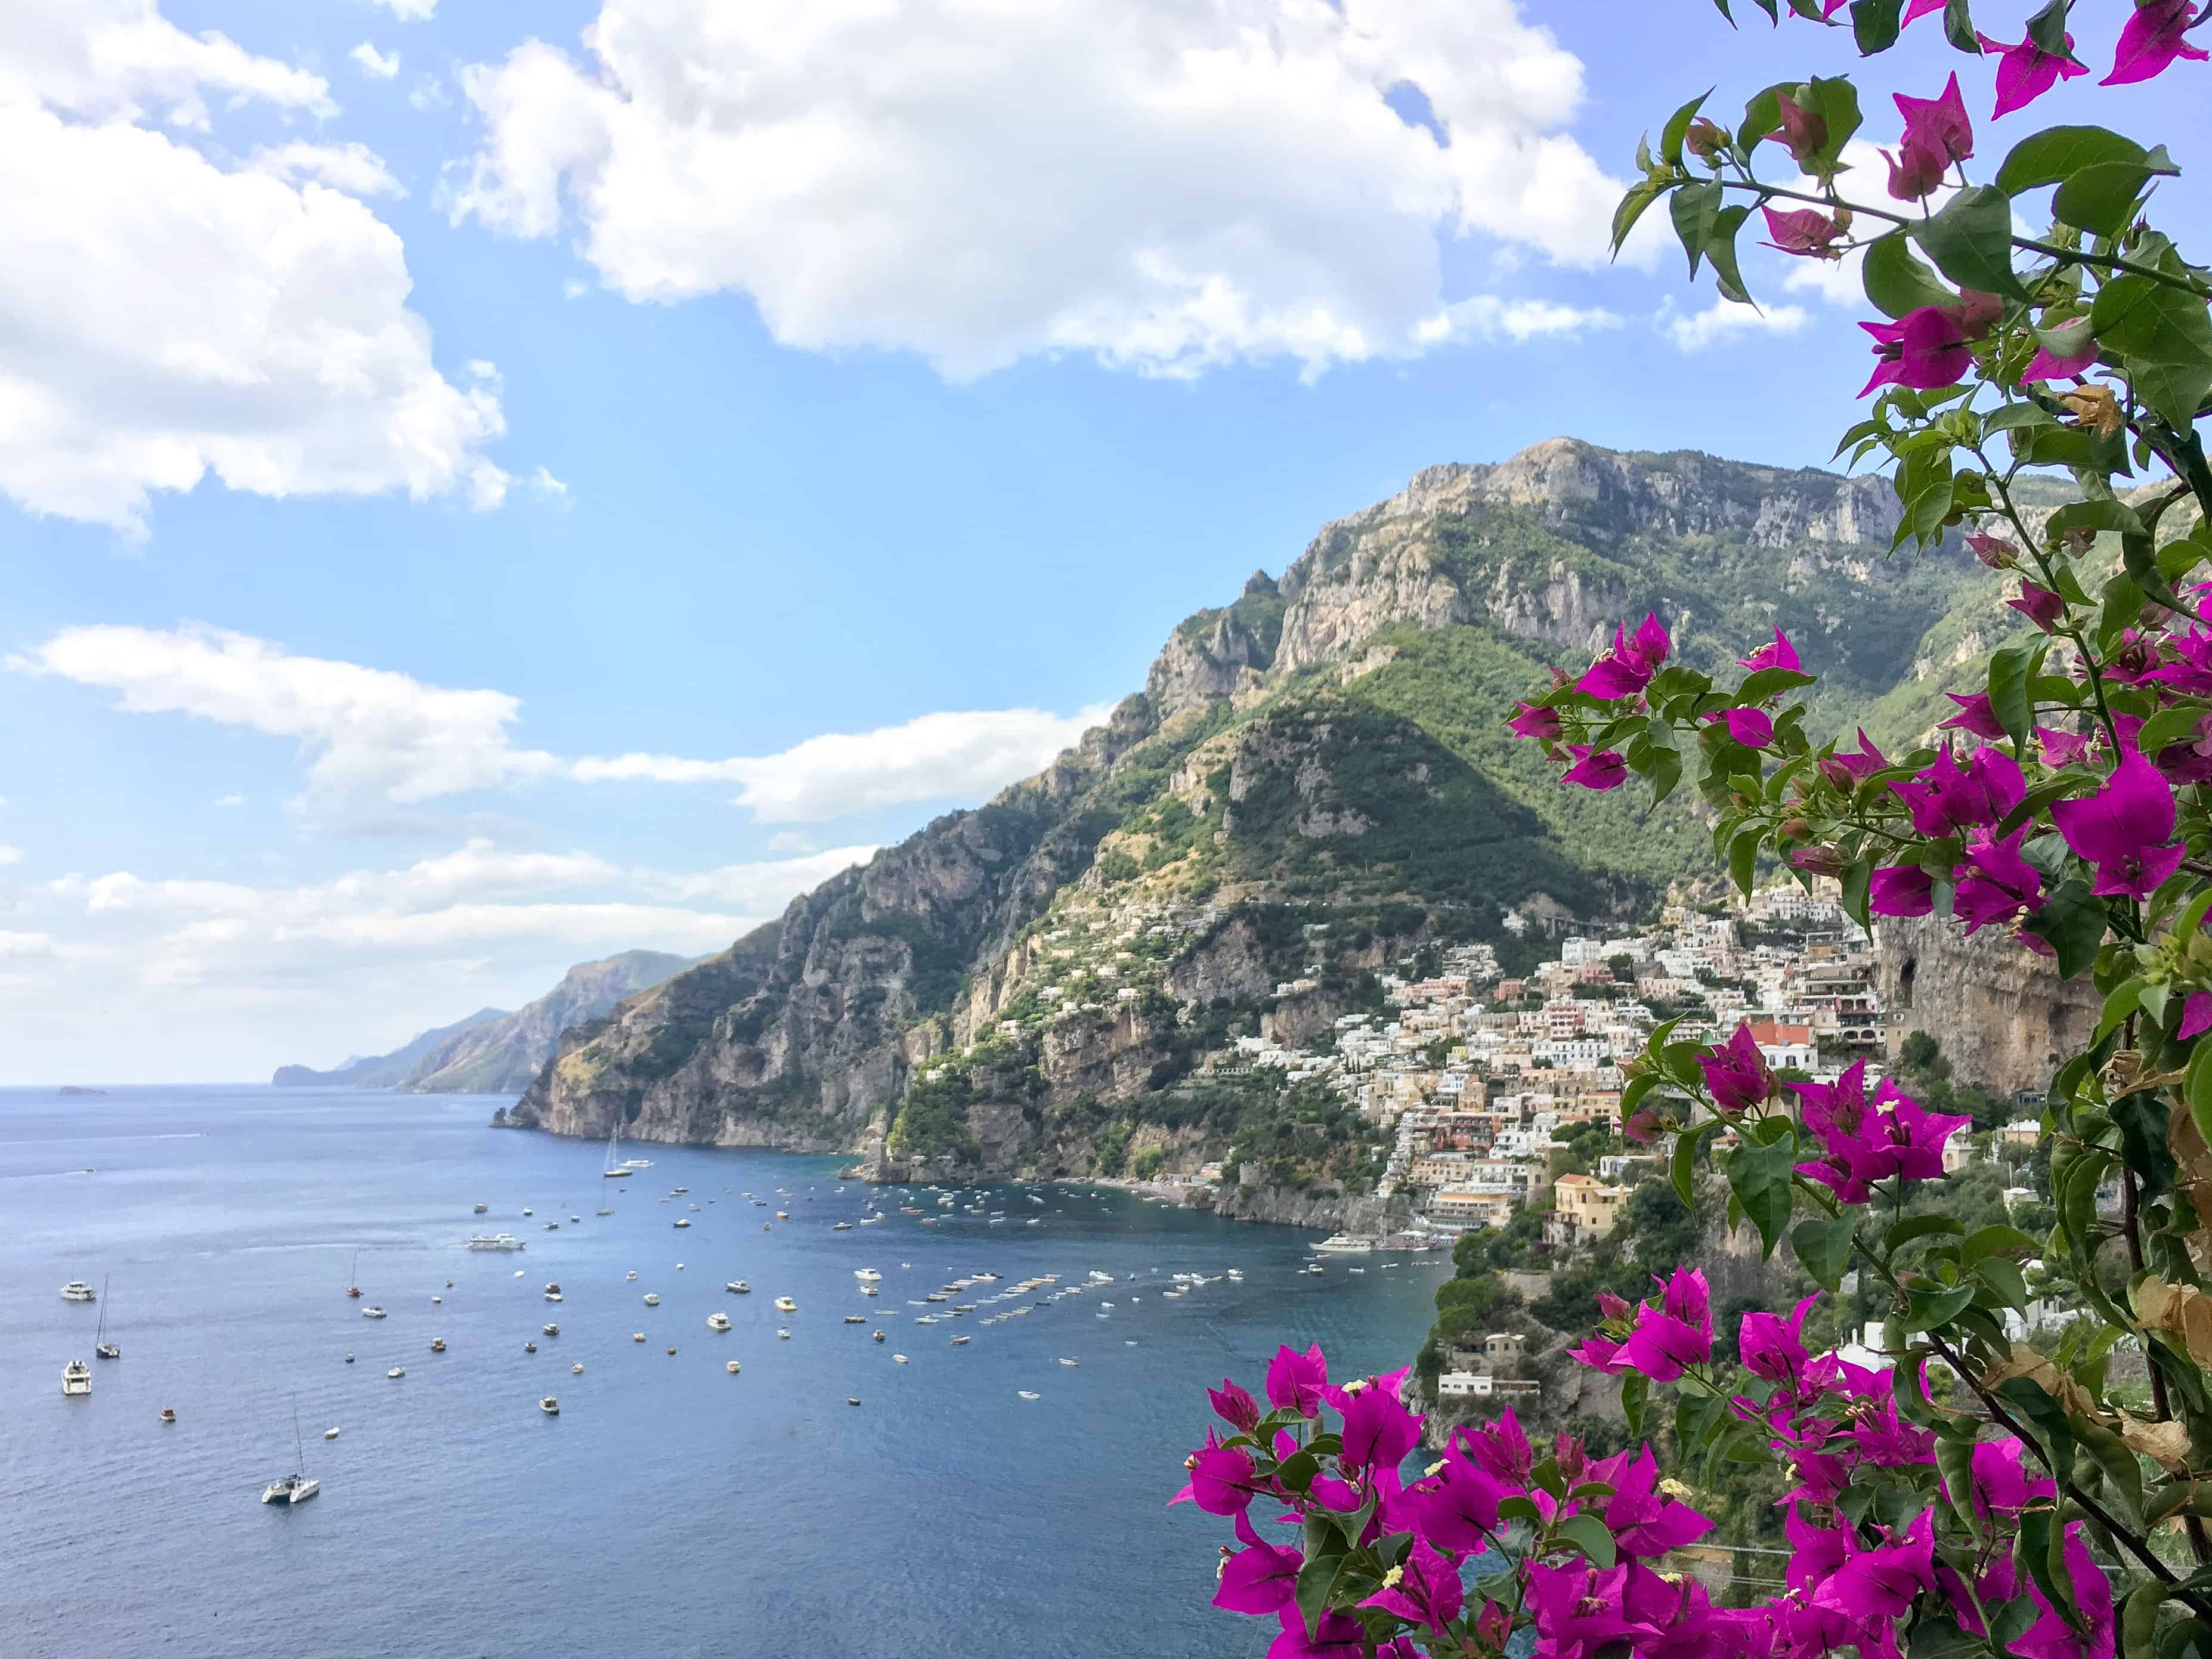 Positano, Italy | The Amalfi Coast in 20 Photos